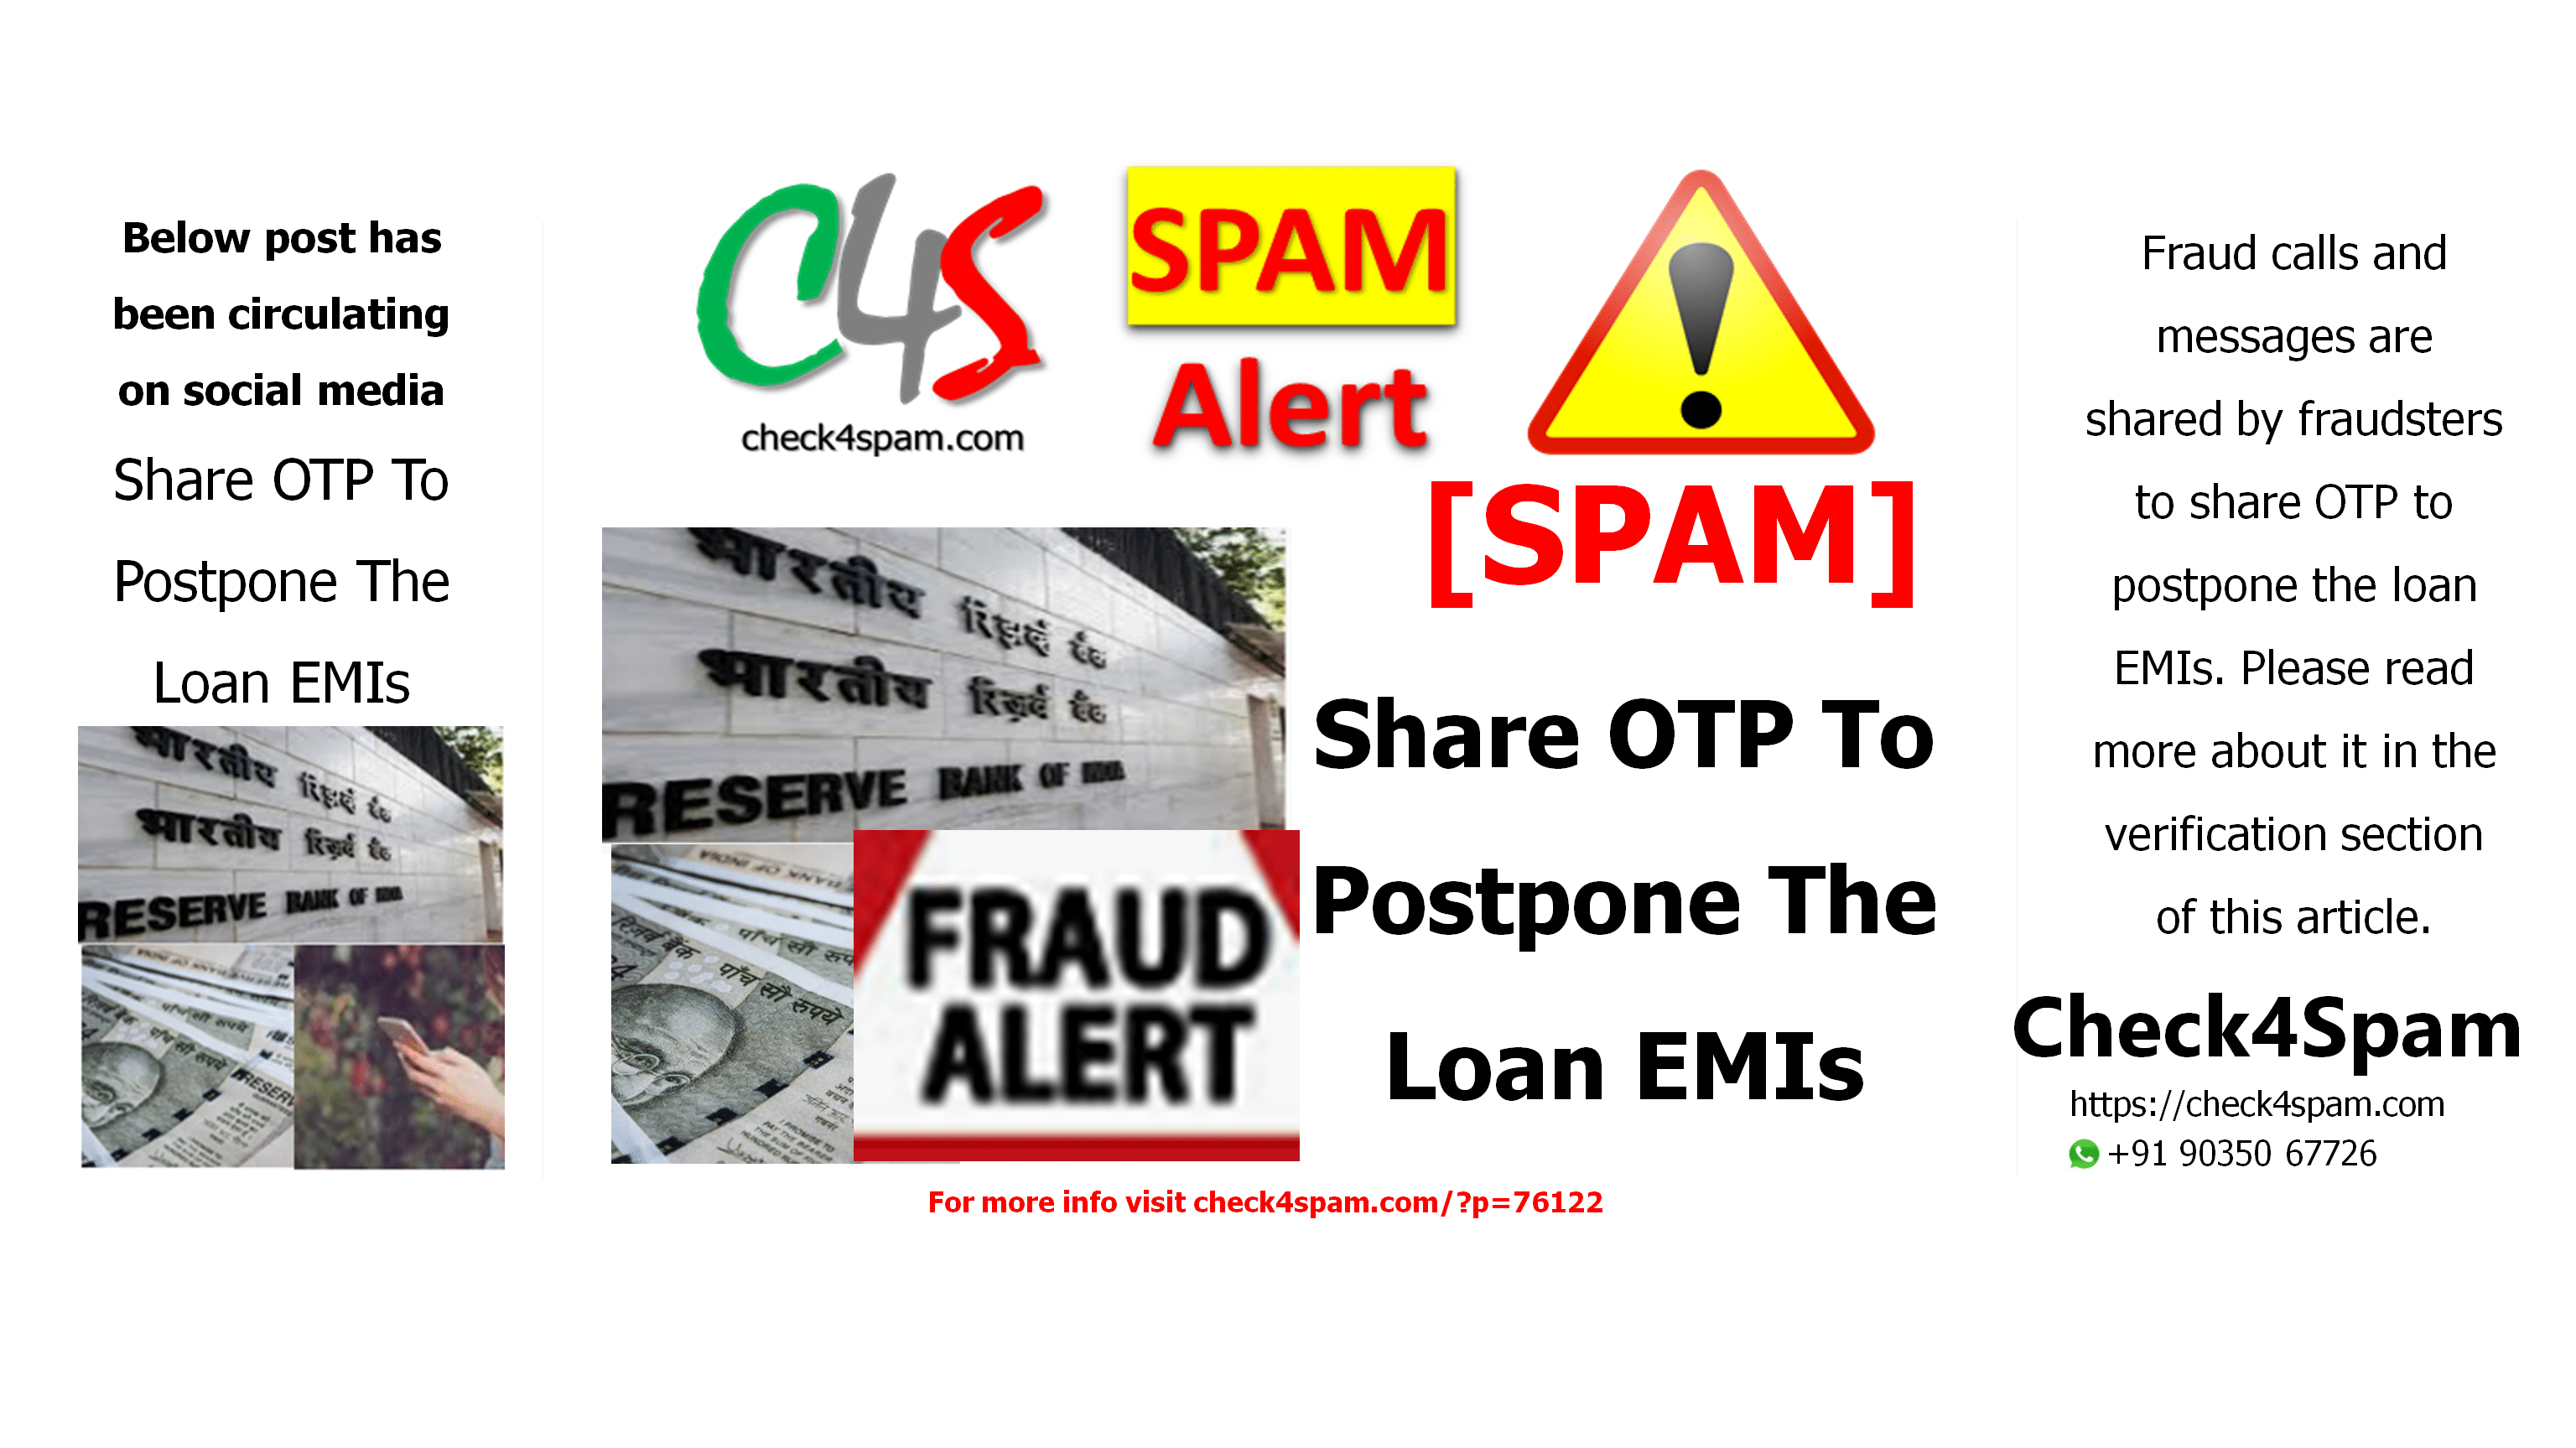 Share OTP To Postpone The Loan EMIs